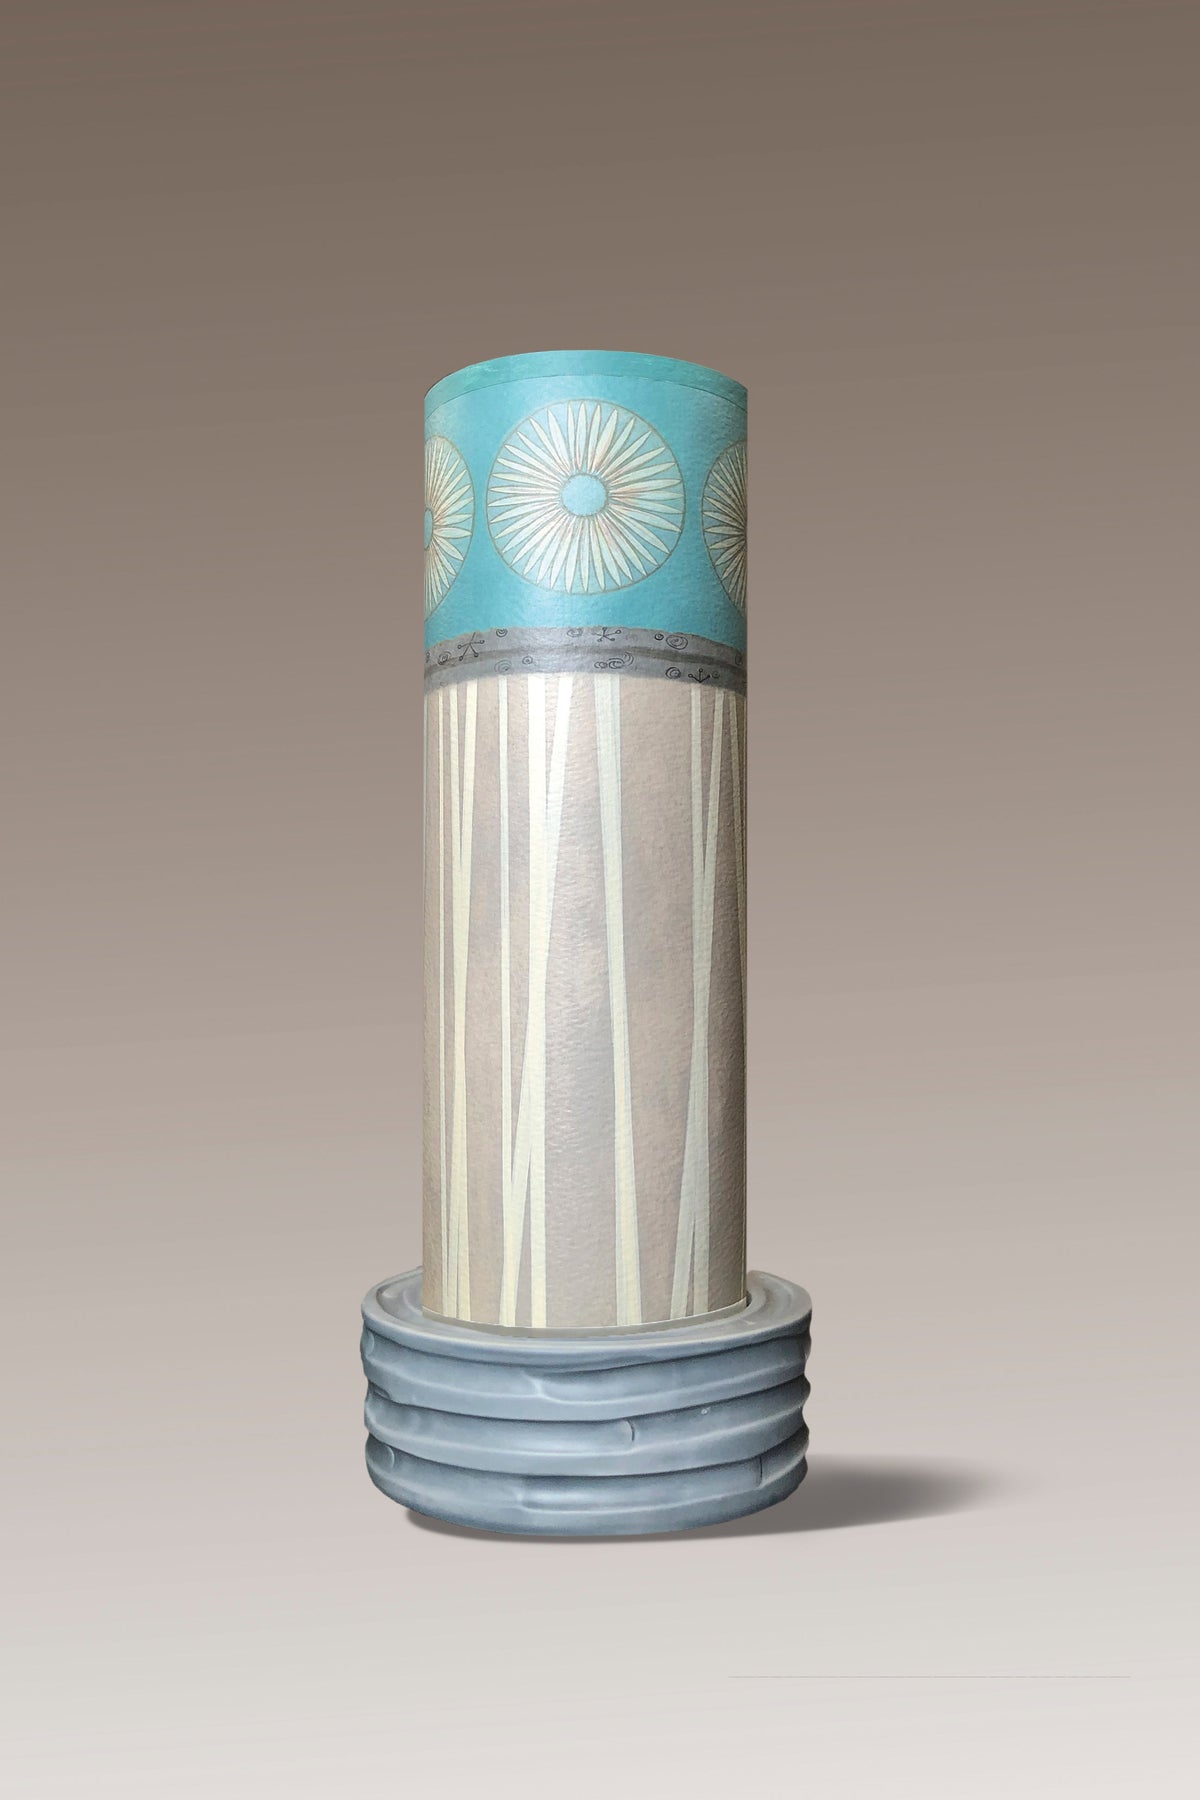 Janna Ugone &amp; Co Luminaires Ceramic Luminaire Accent Lamp with Pool Shade